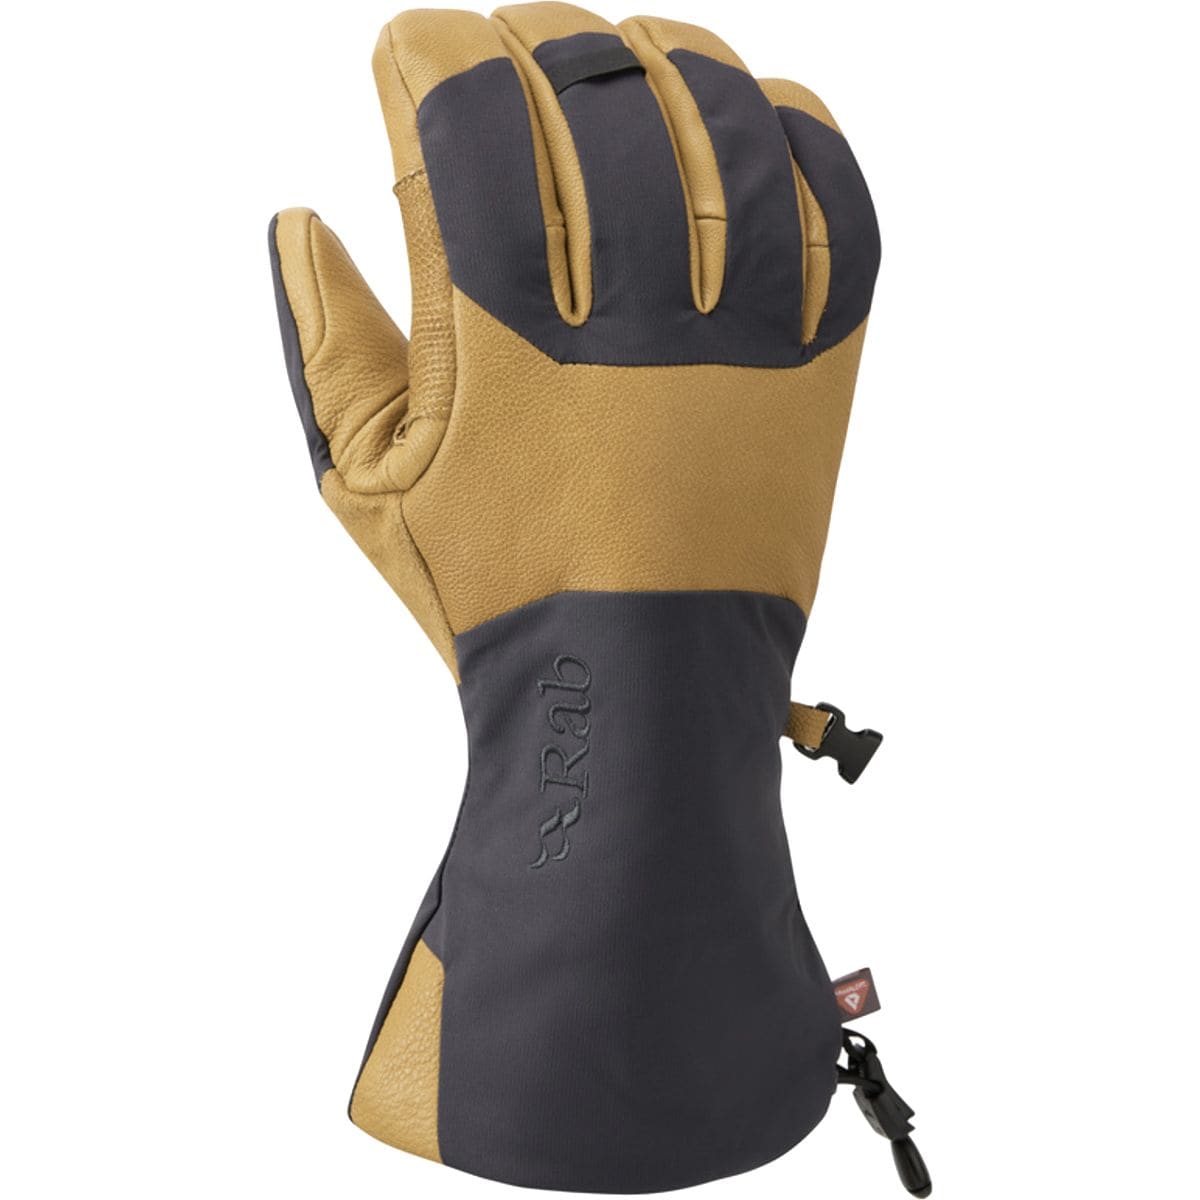 Rab Guide 2 GTX Glove - Men's